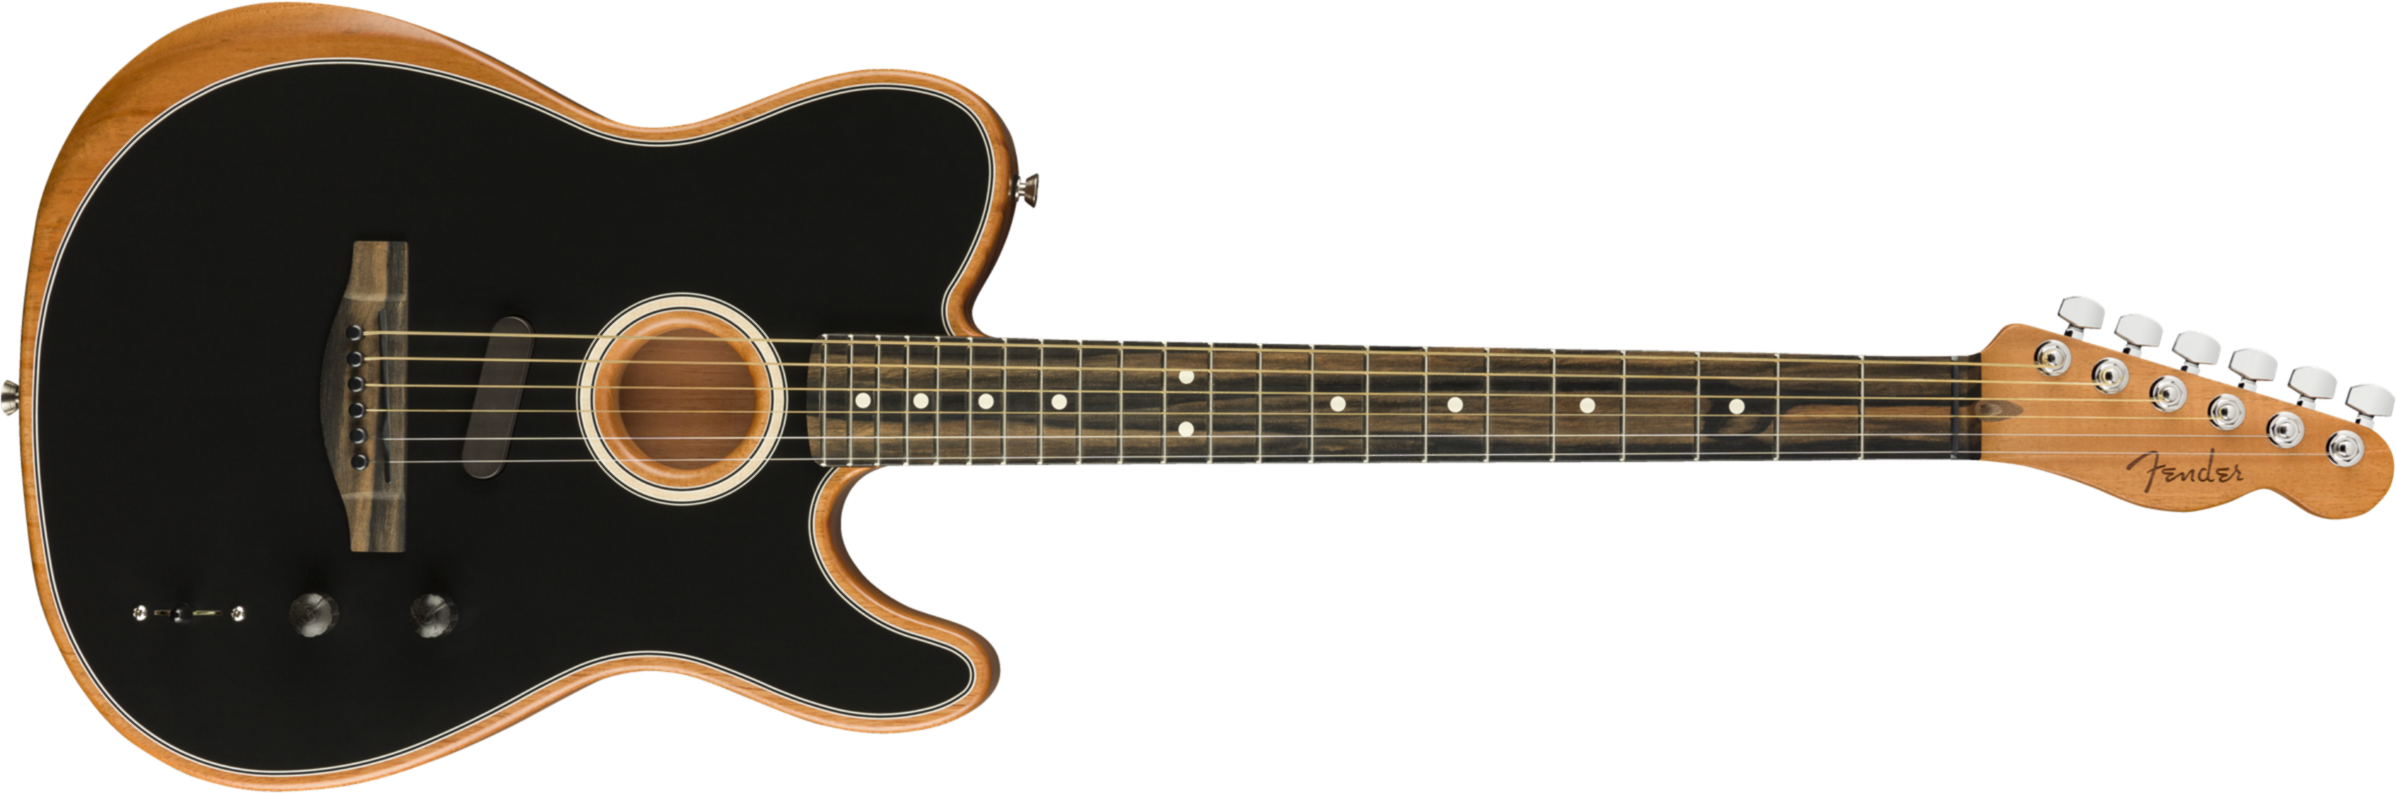 Fender Tele American Acoustasonic Usa Eb - Black - Electro acoustic guitar - Main picture